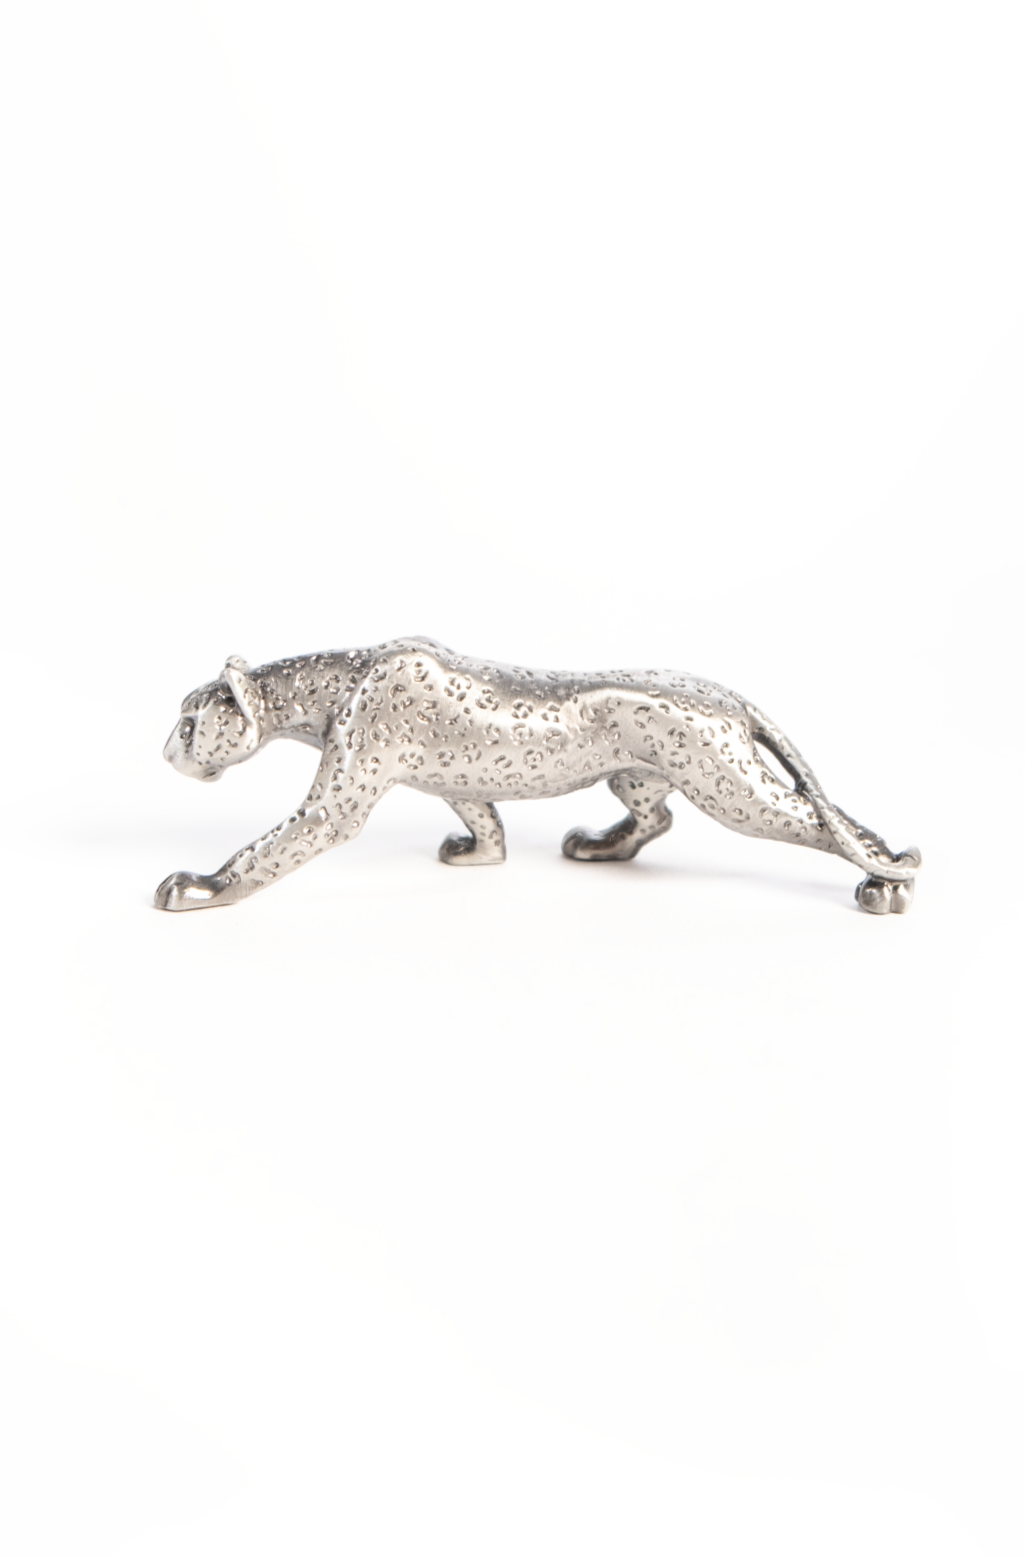 Leopard Pewter Figurine